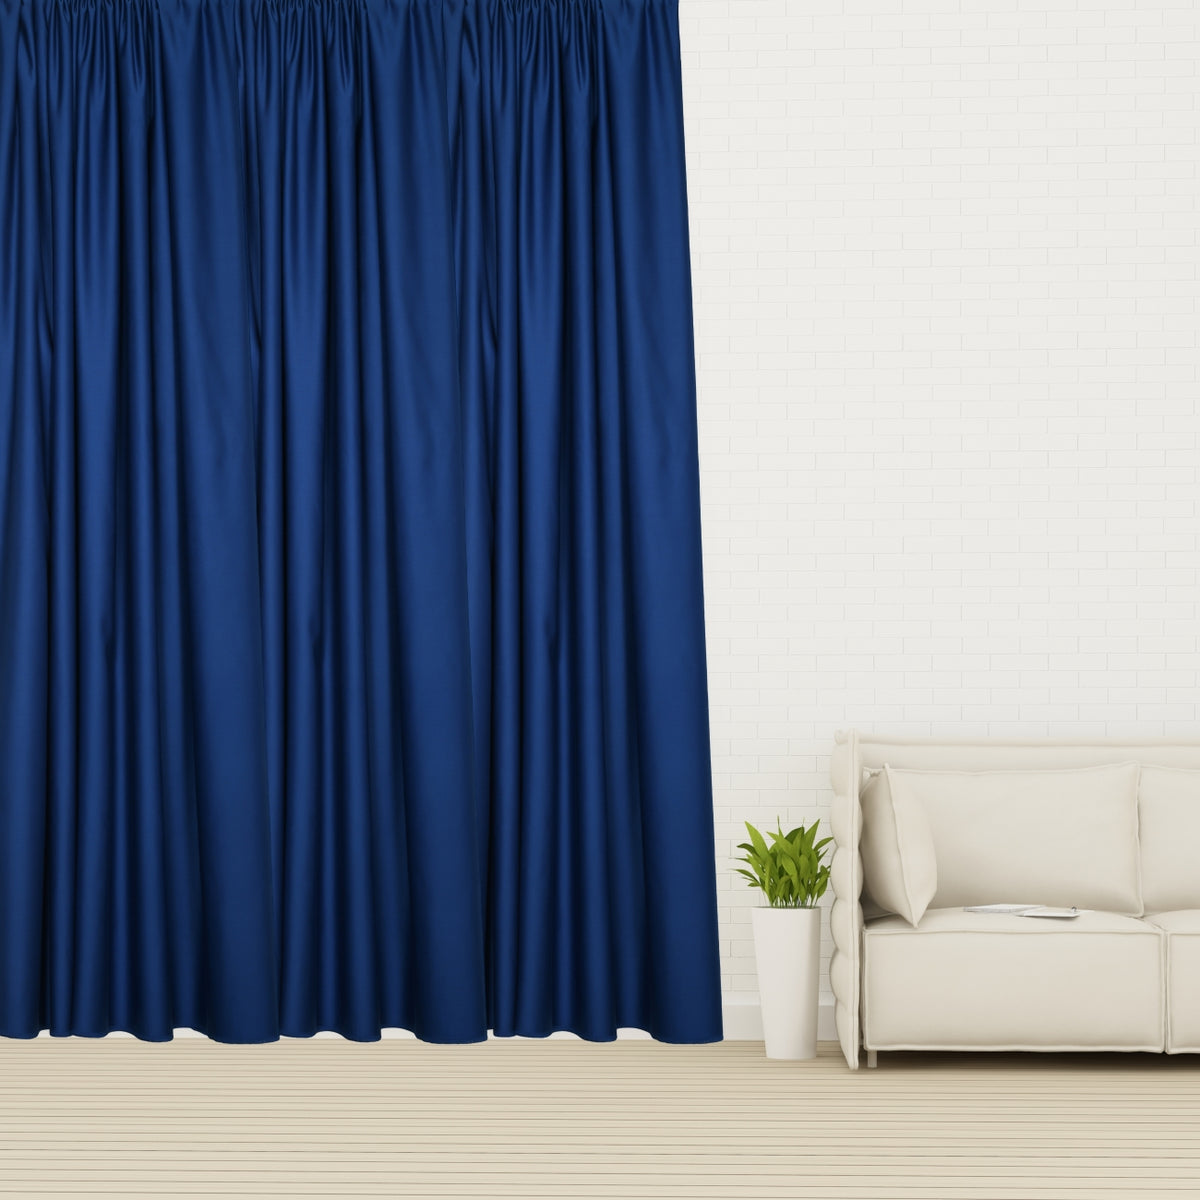 Night curtain blue soft